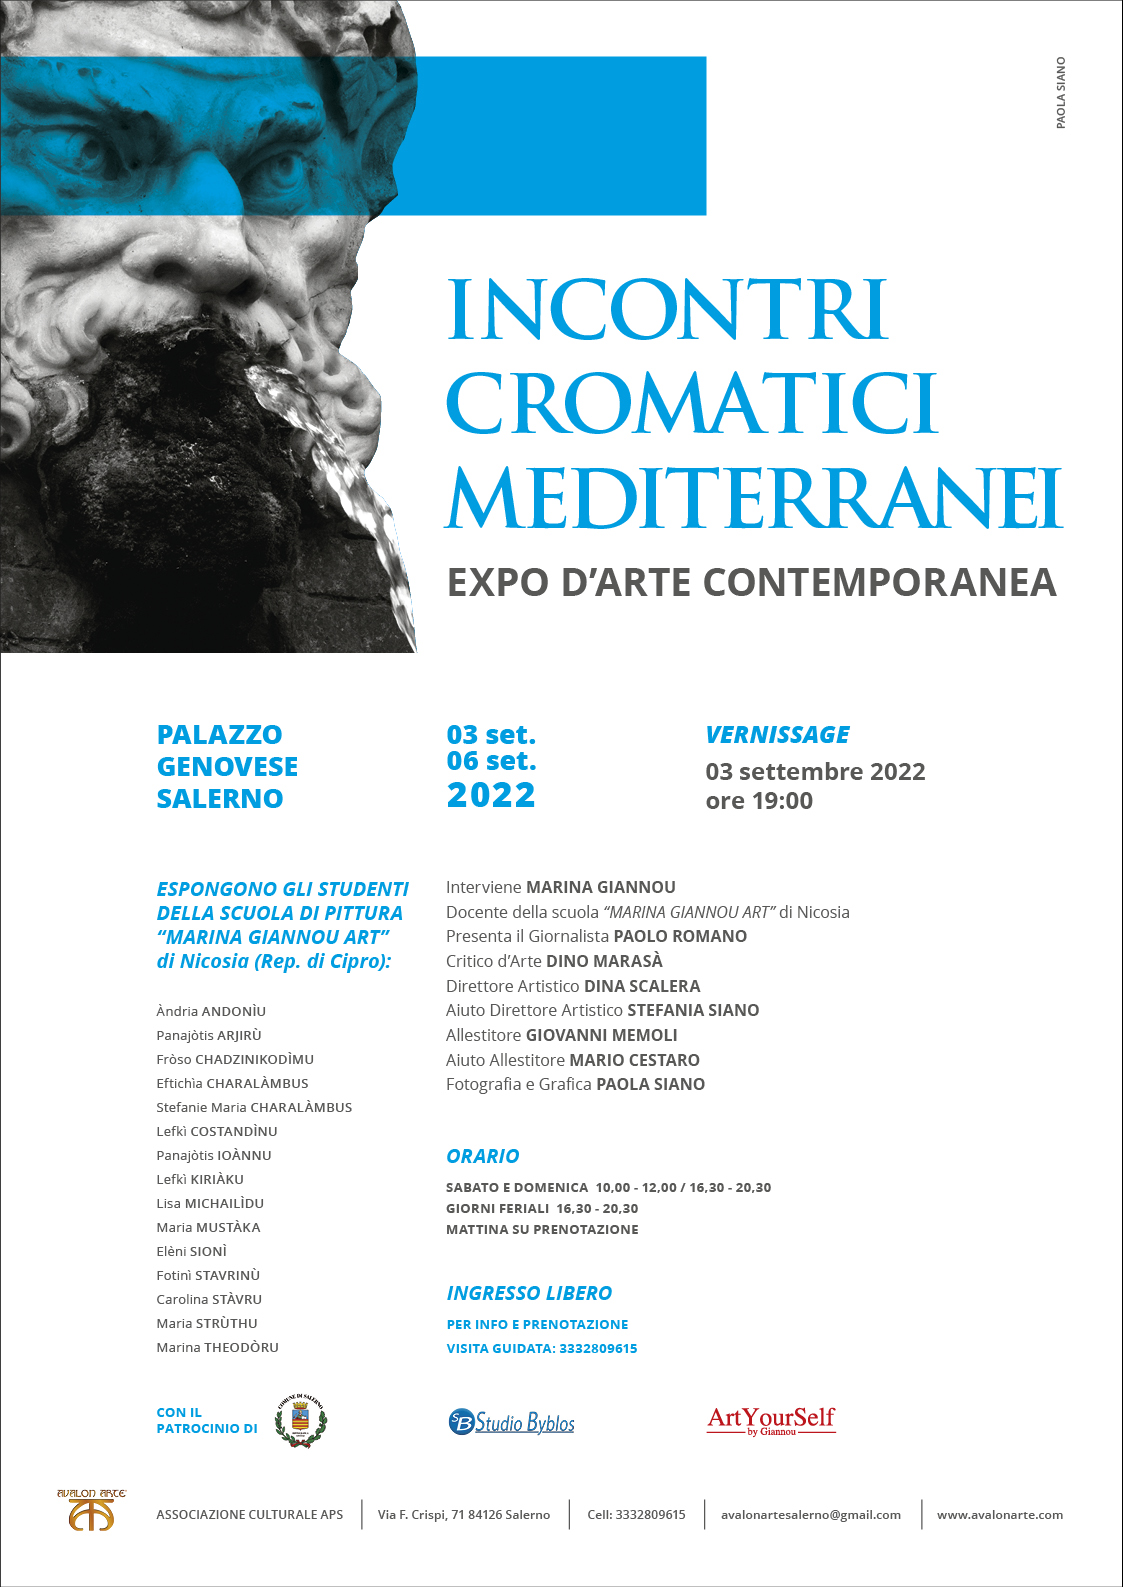 Foto 1 - Expo d'Arte Contemporanea INCONTRI CROMATICI MEDITERRANEI a Salerno 